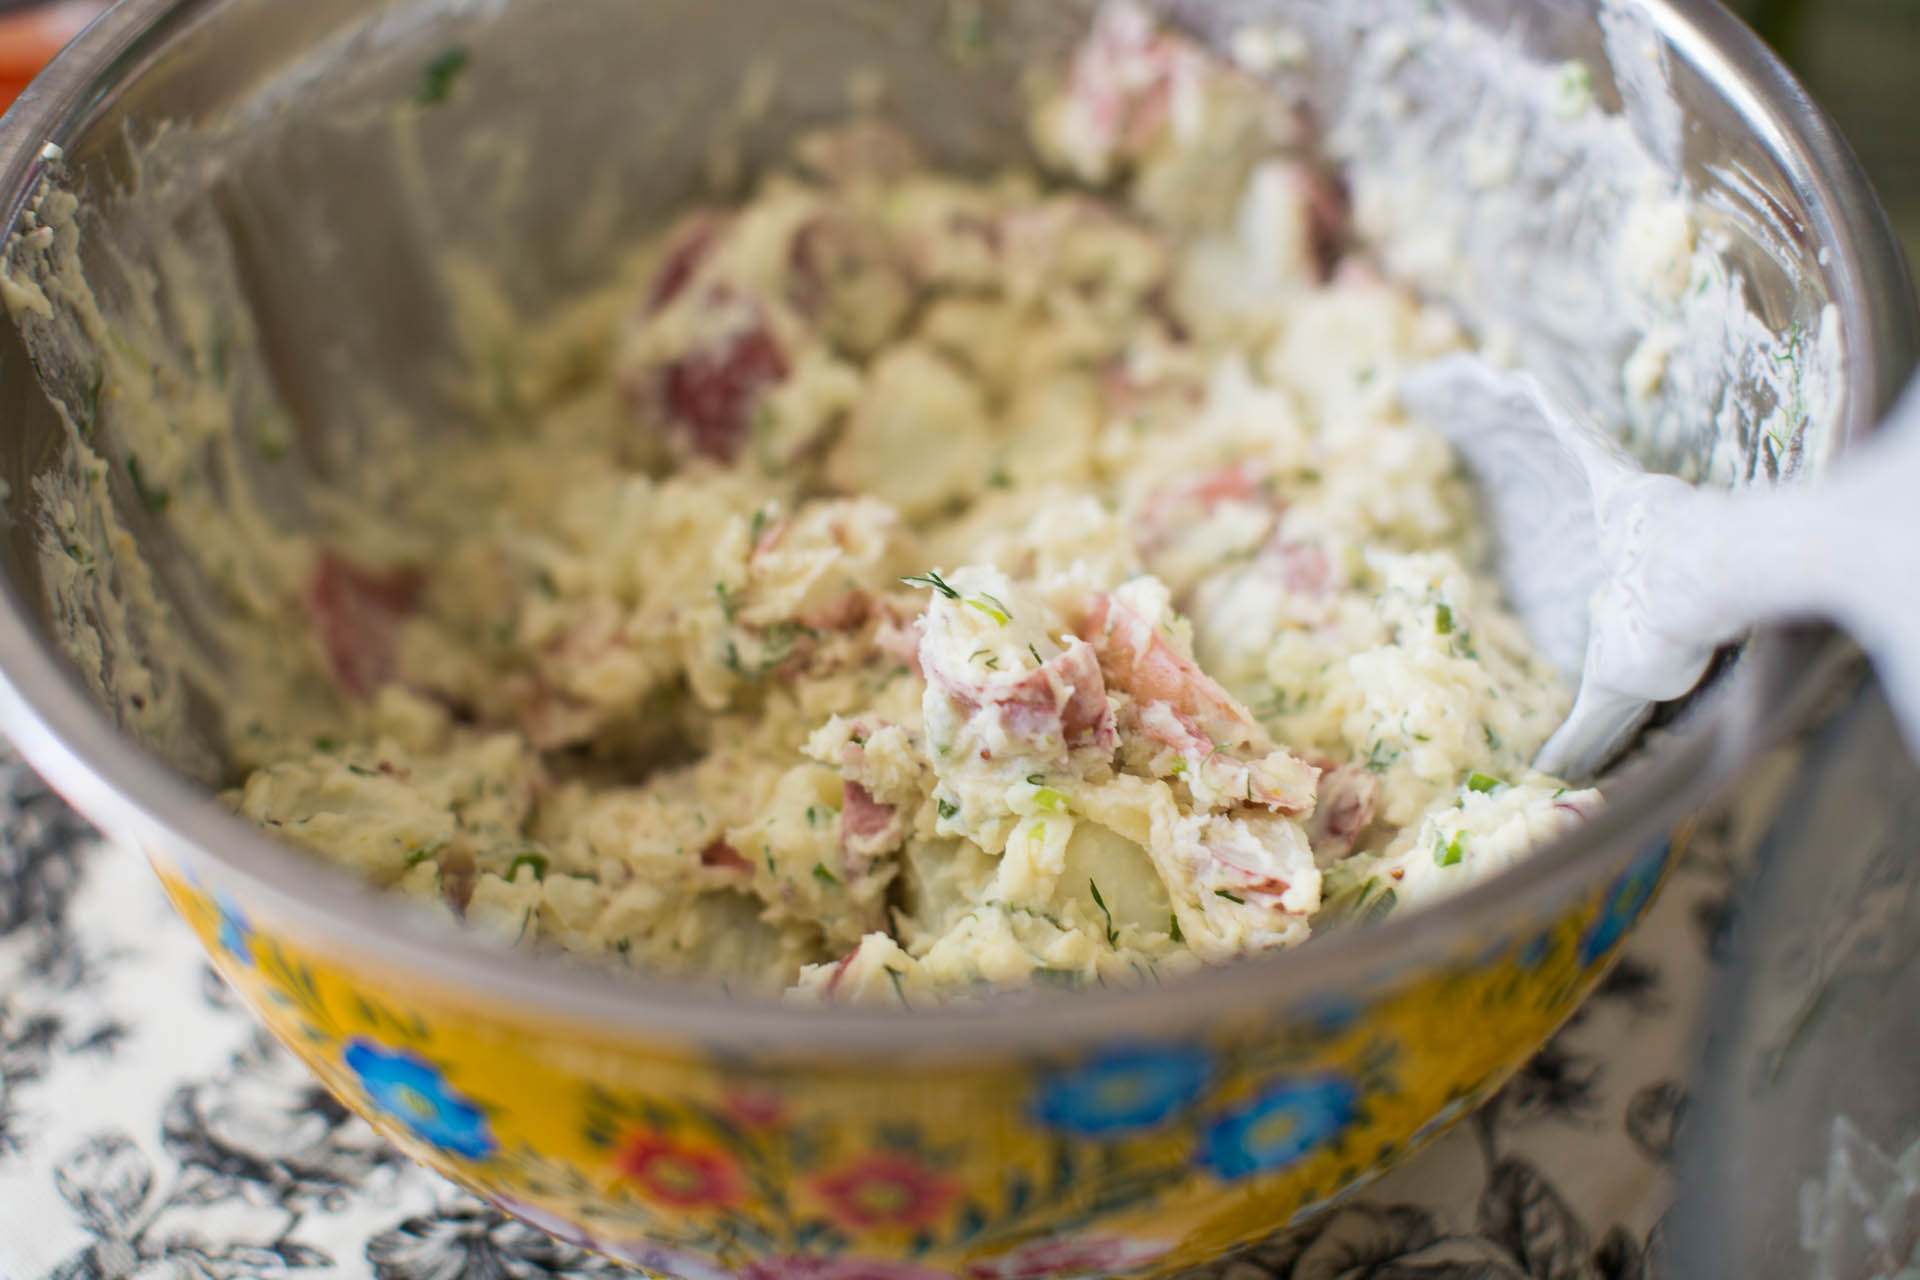 Potato Salad with Whole Grain Mustard, Scallions & Dill